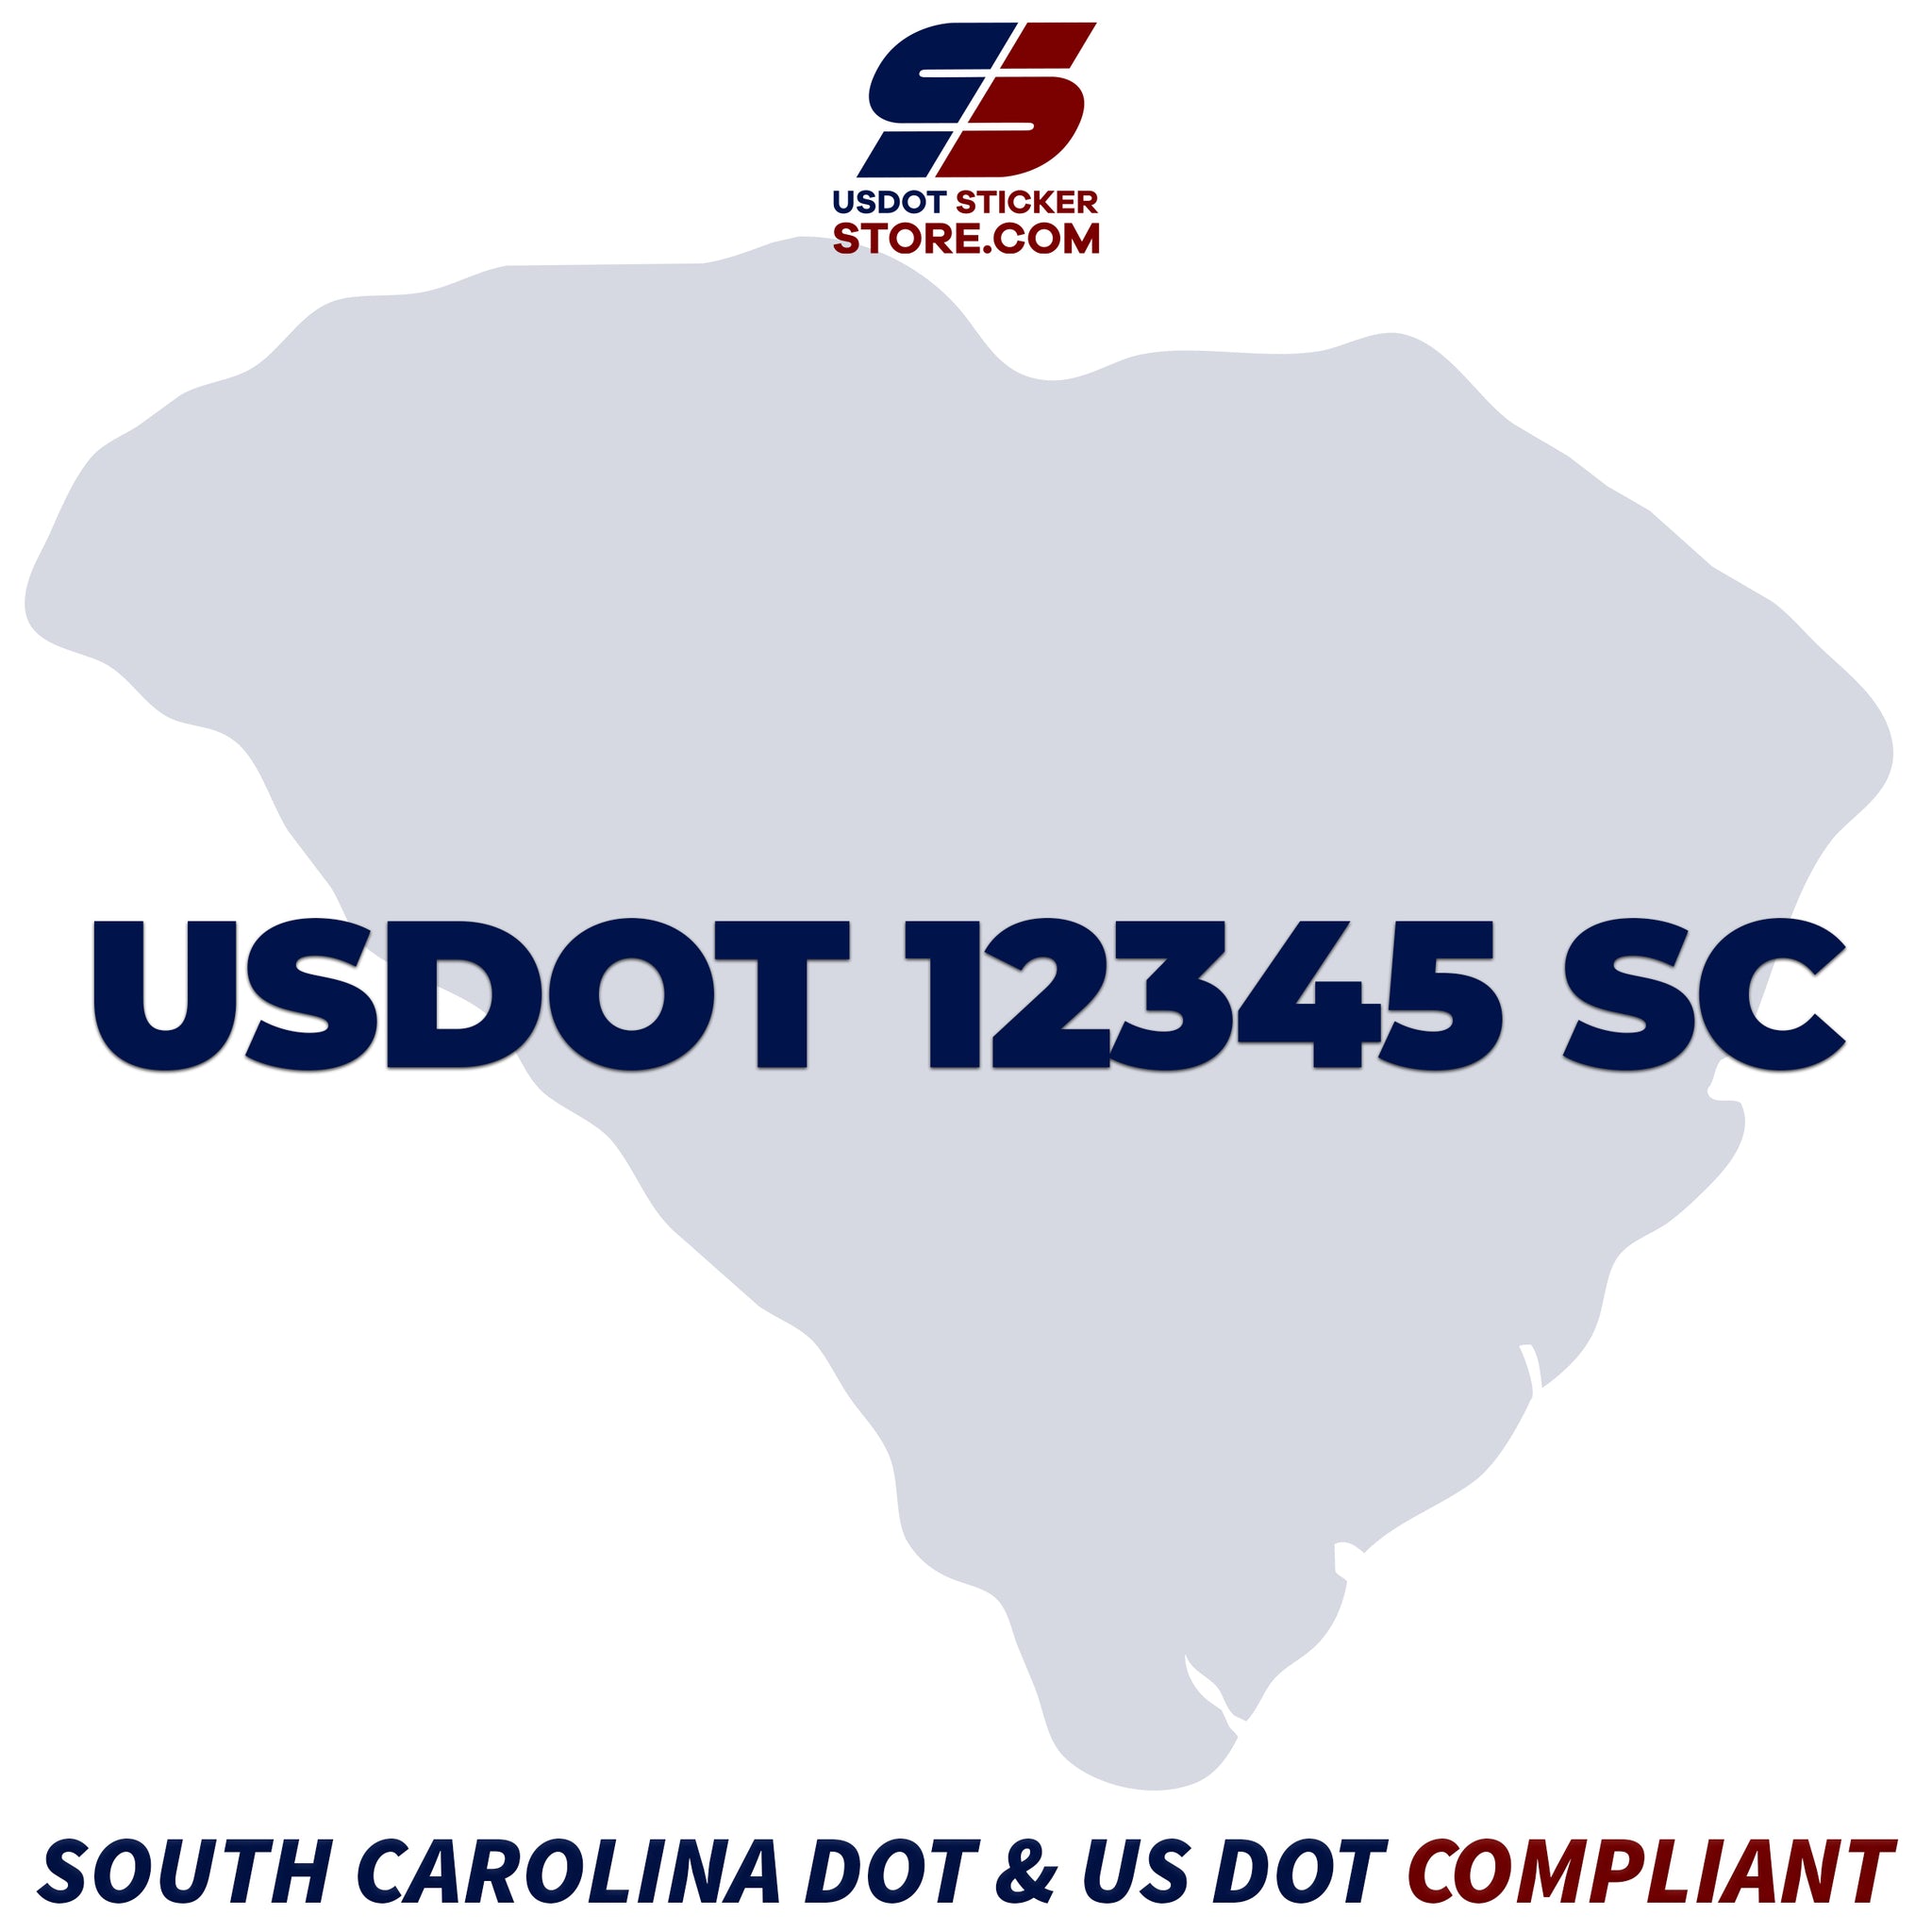 usdot sticker South Carolina